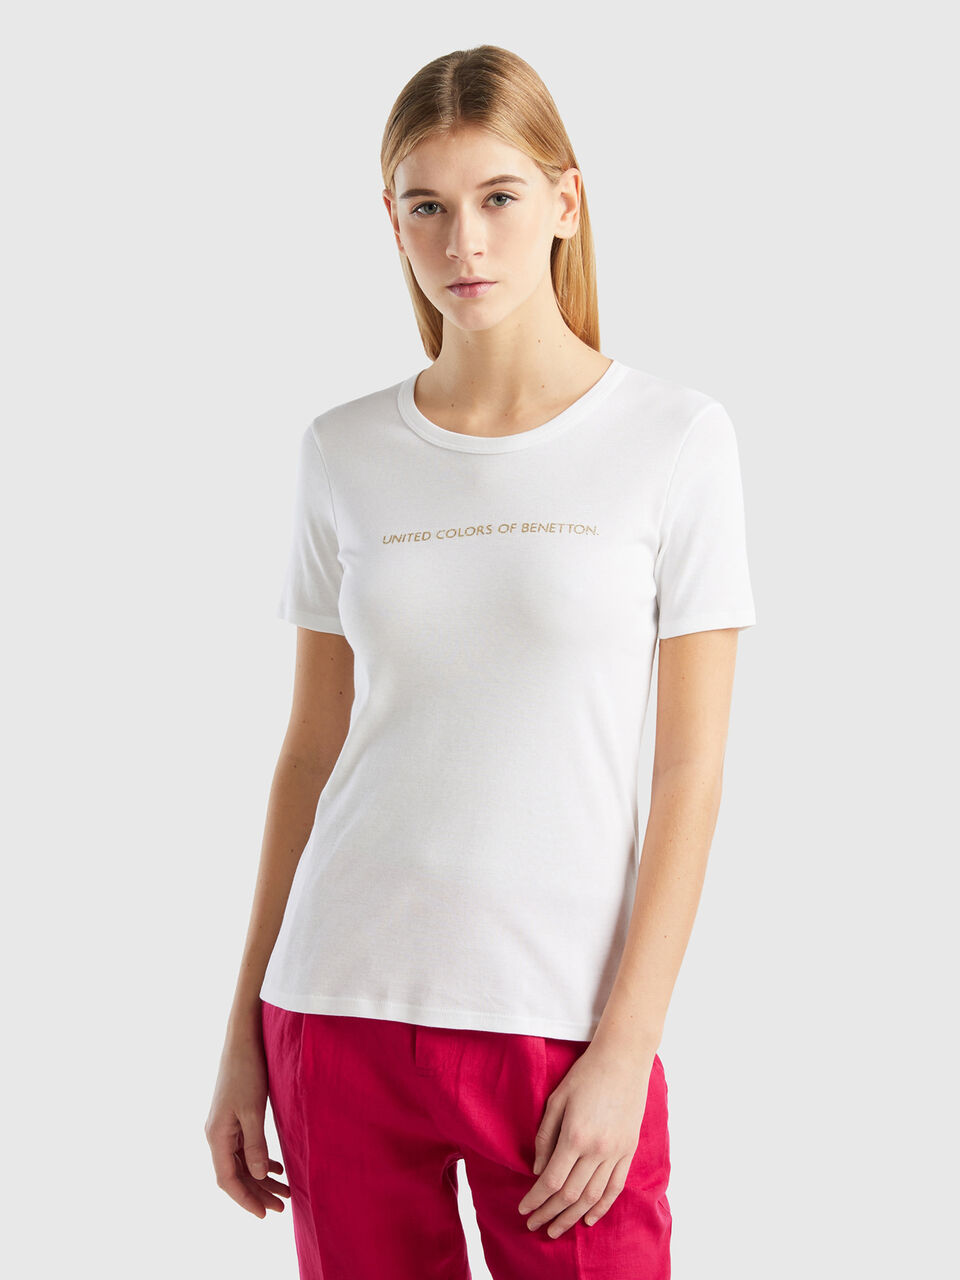 T-shirt in 100% cotton with glitter print logo - White | Benetton